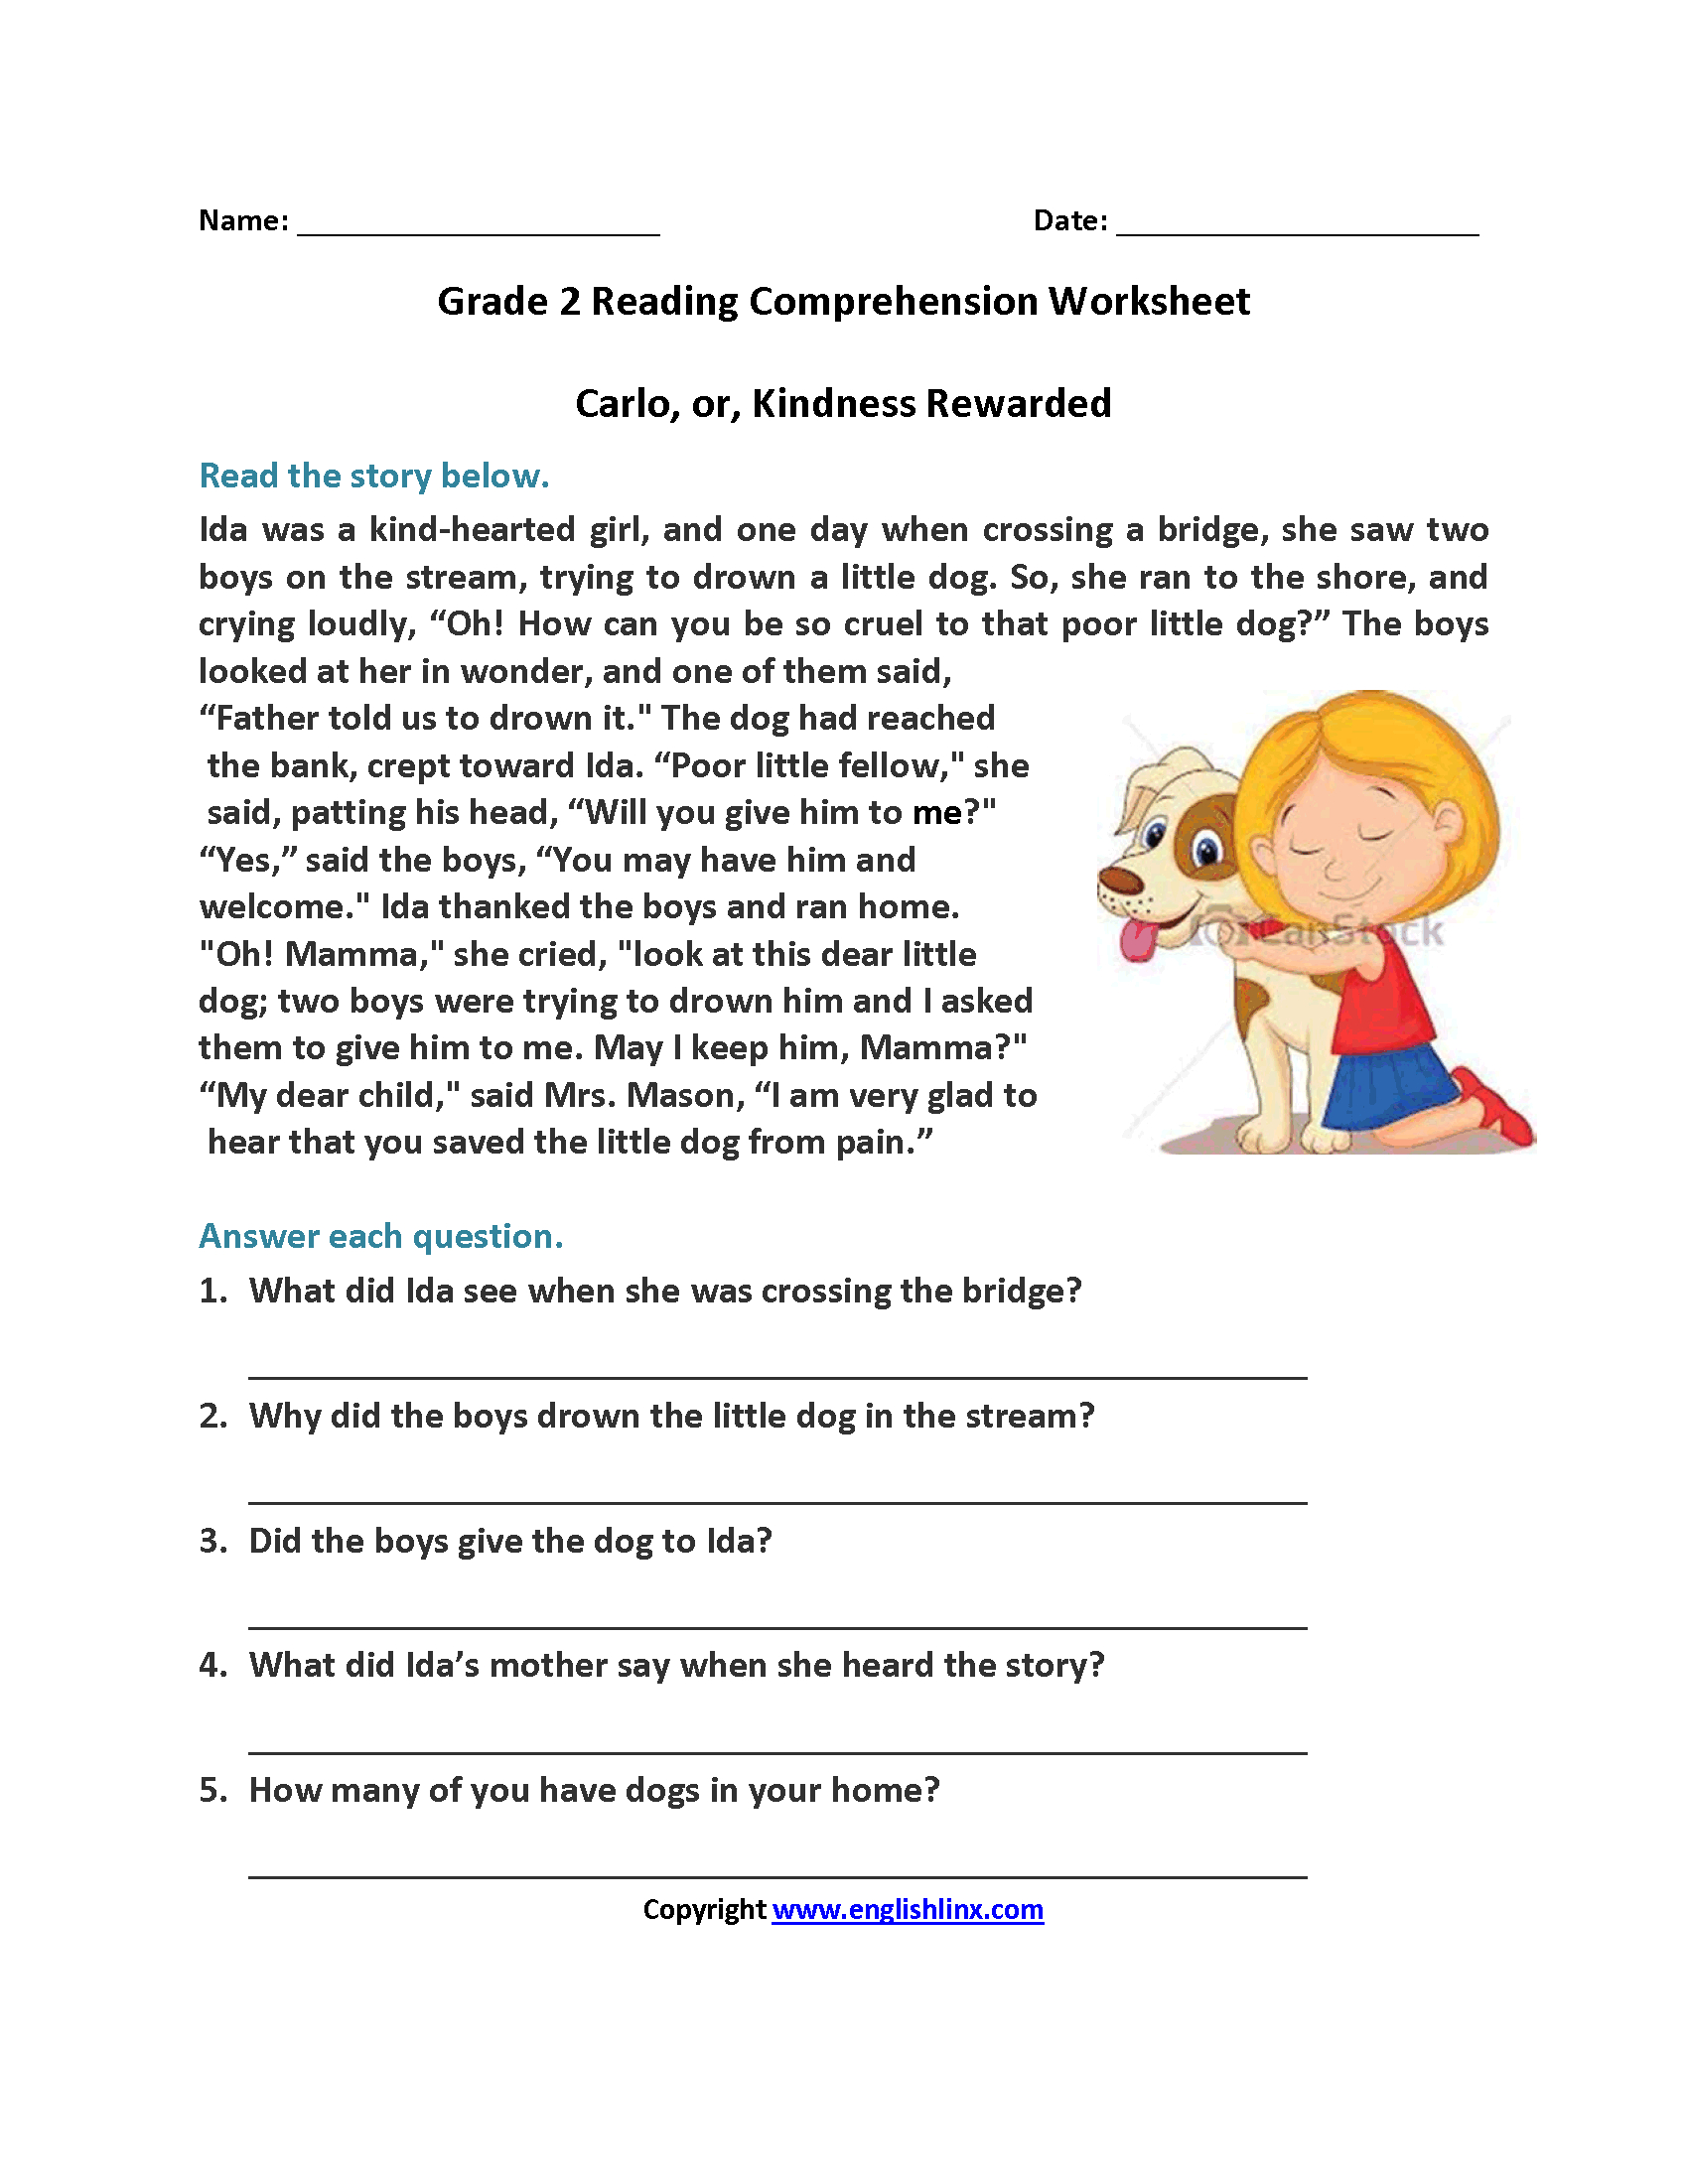 Carlo Or Kindness Rewarded Second Grade Reading Worksheets | Reading - Free Printable Hindi Comprehension Worksheets For Grade 3